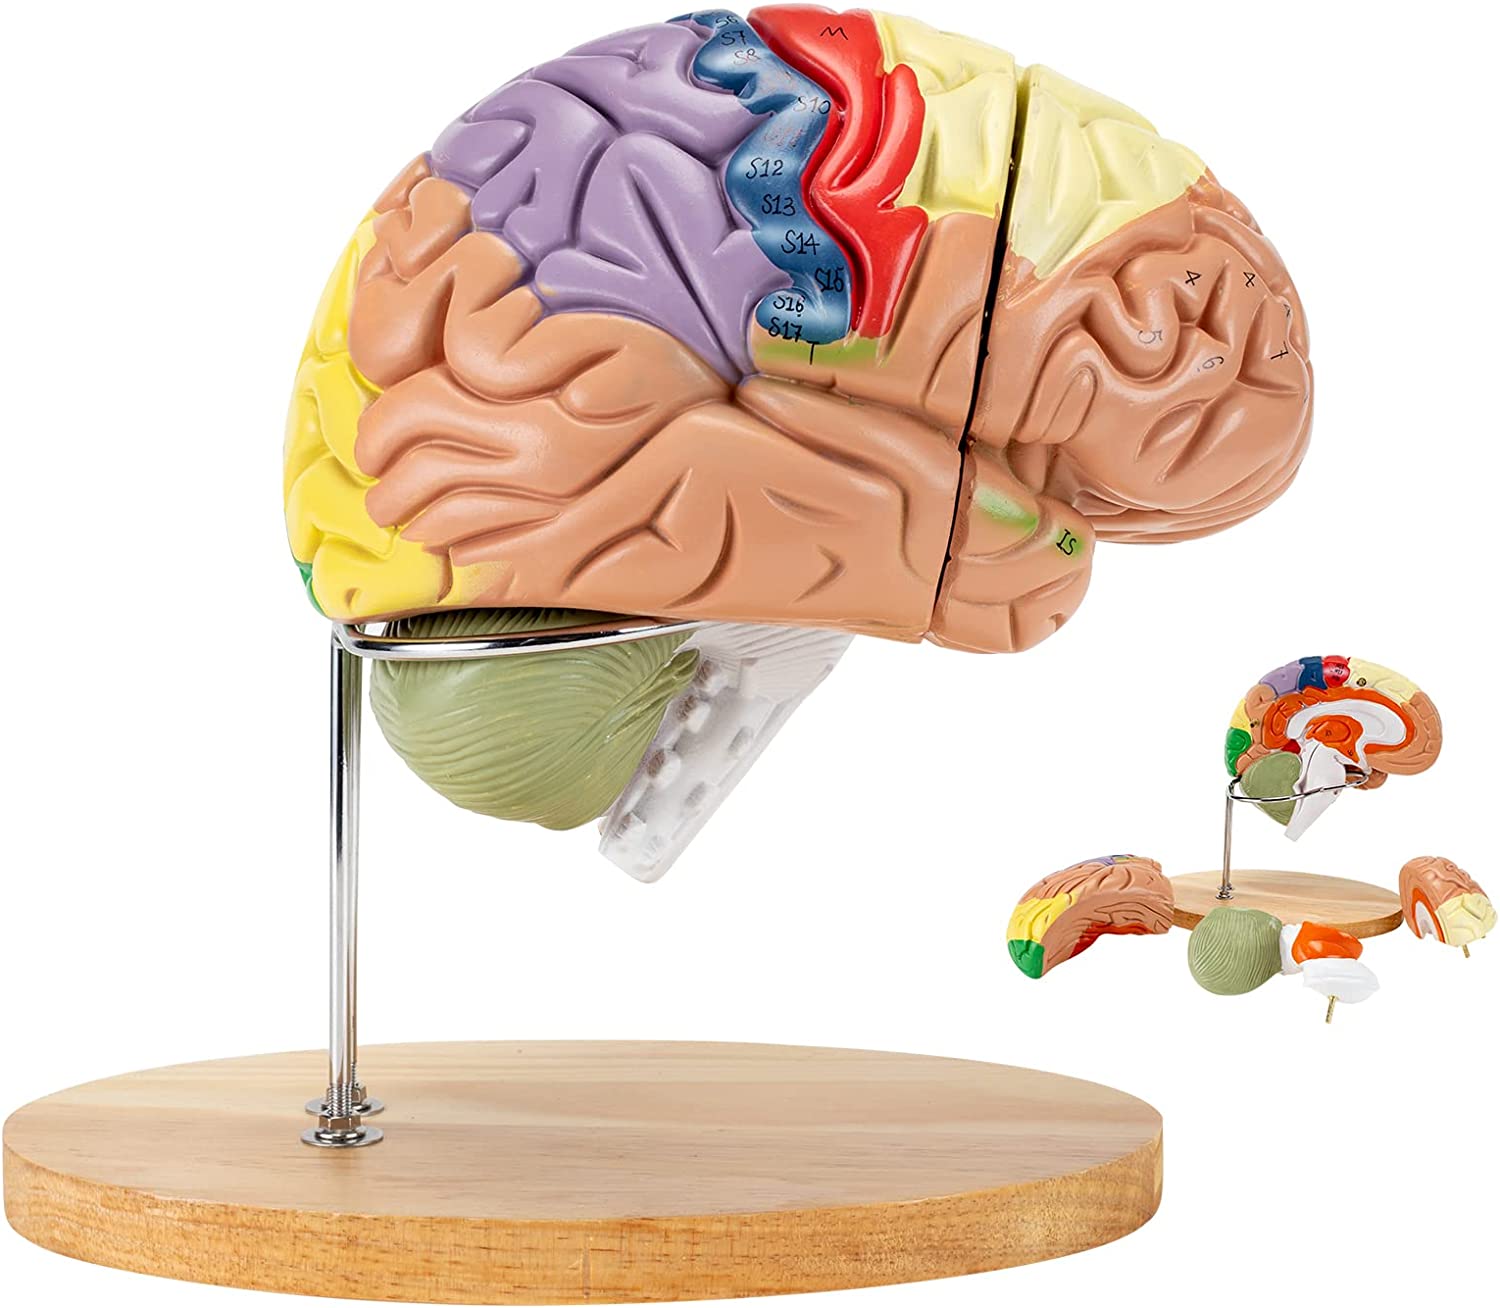 RONTEN 2 Times Life-Size Brain Model Anatomical Model Detachable Medical Brain Supplement Model